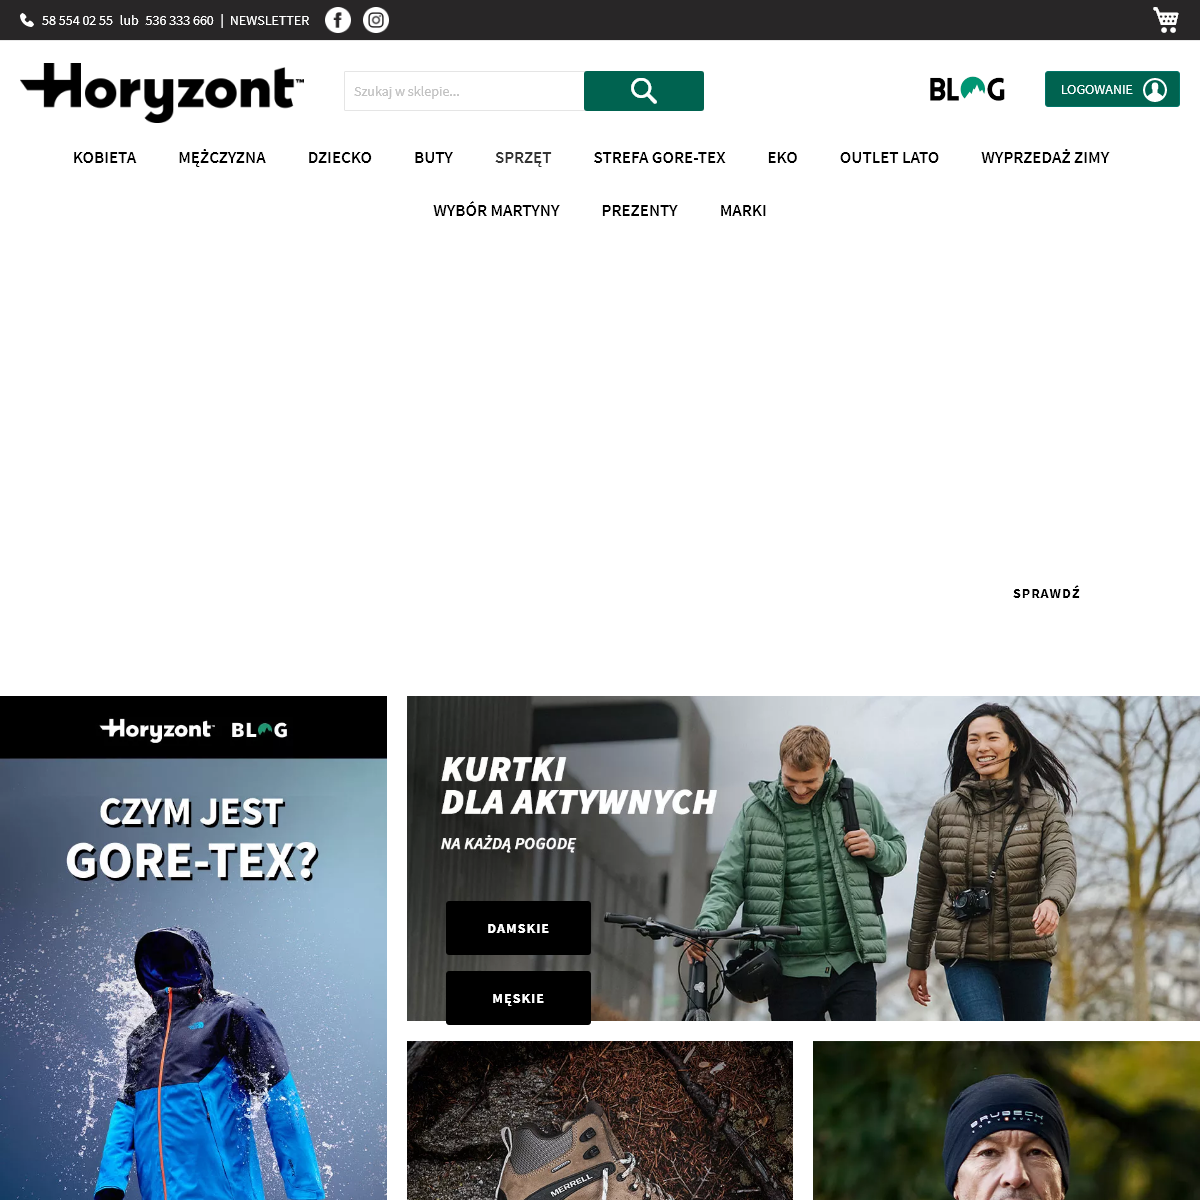 A complete backup of e-horyzont.pl